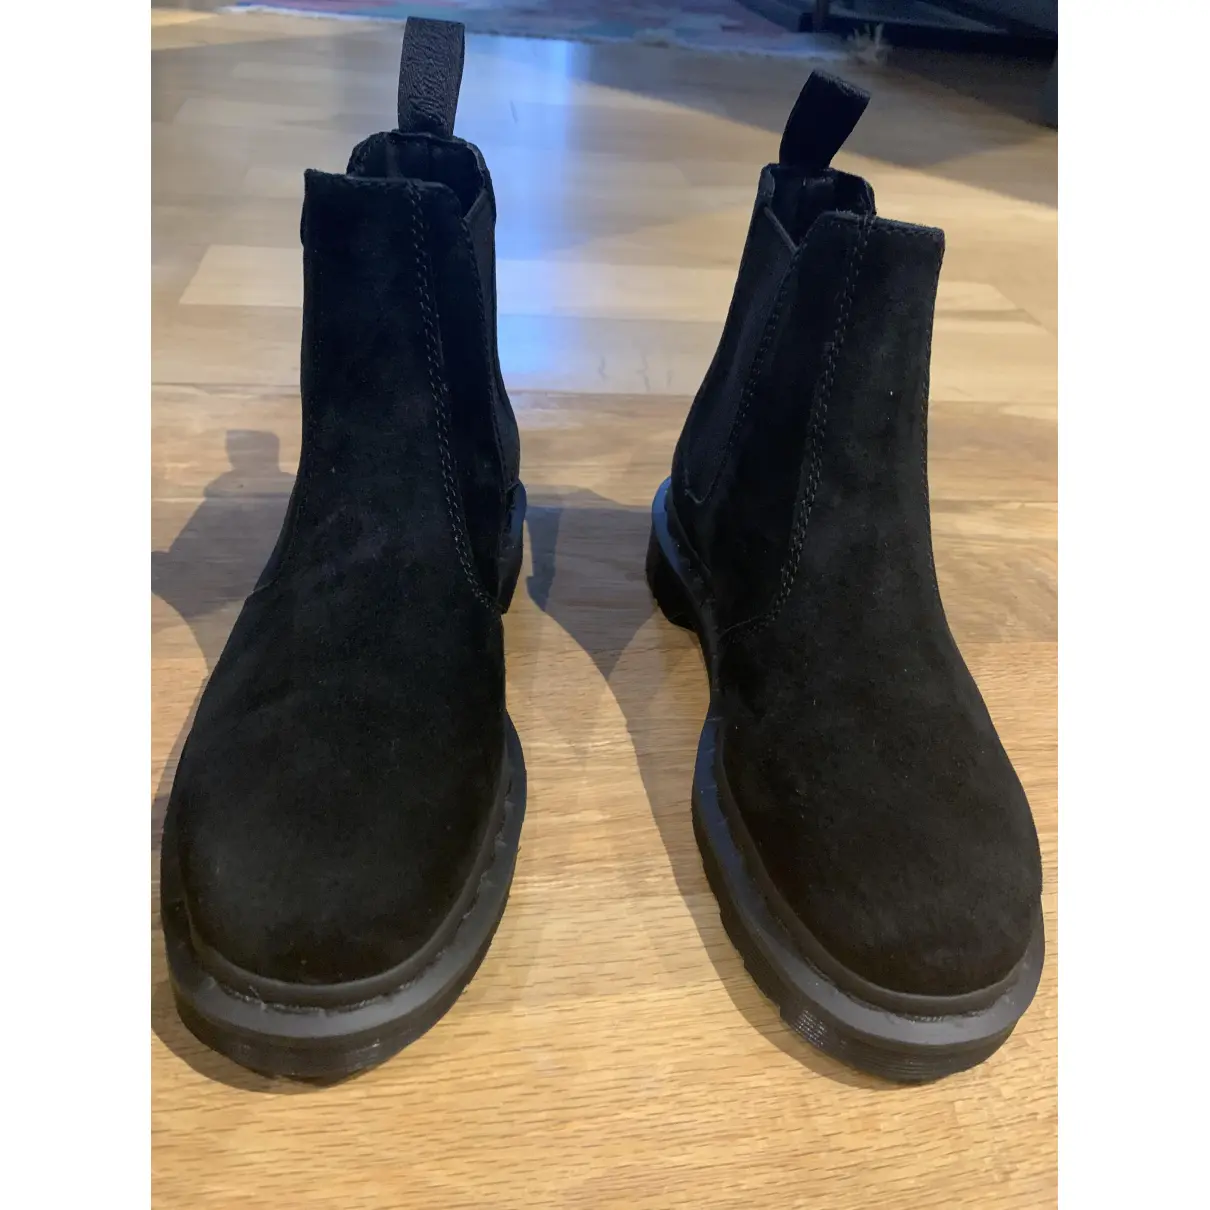 Buy Dr. Martens Ankle boots online